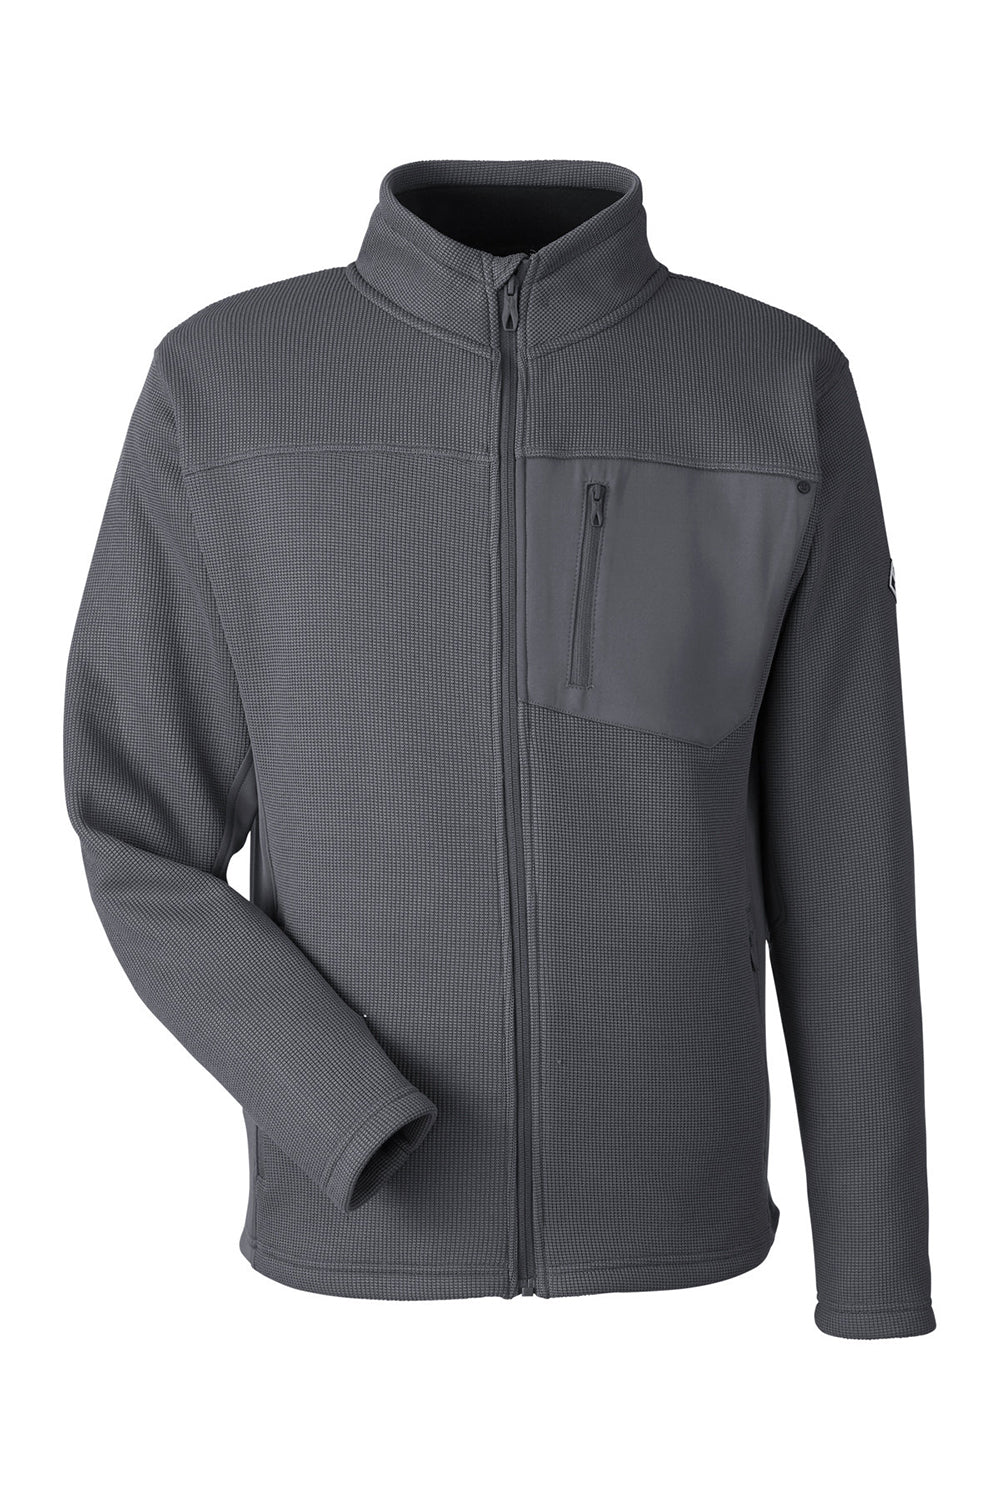 Spyder S17936 Mens Constant Canyon Full Zip Sweater Jacket Polar Grey Flat Front